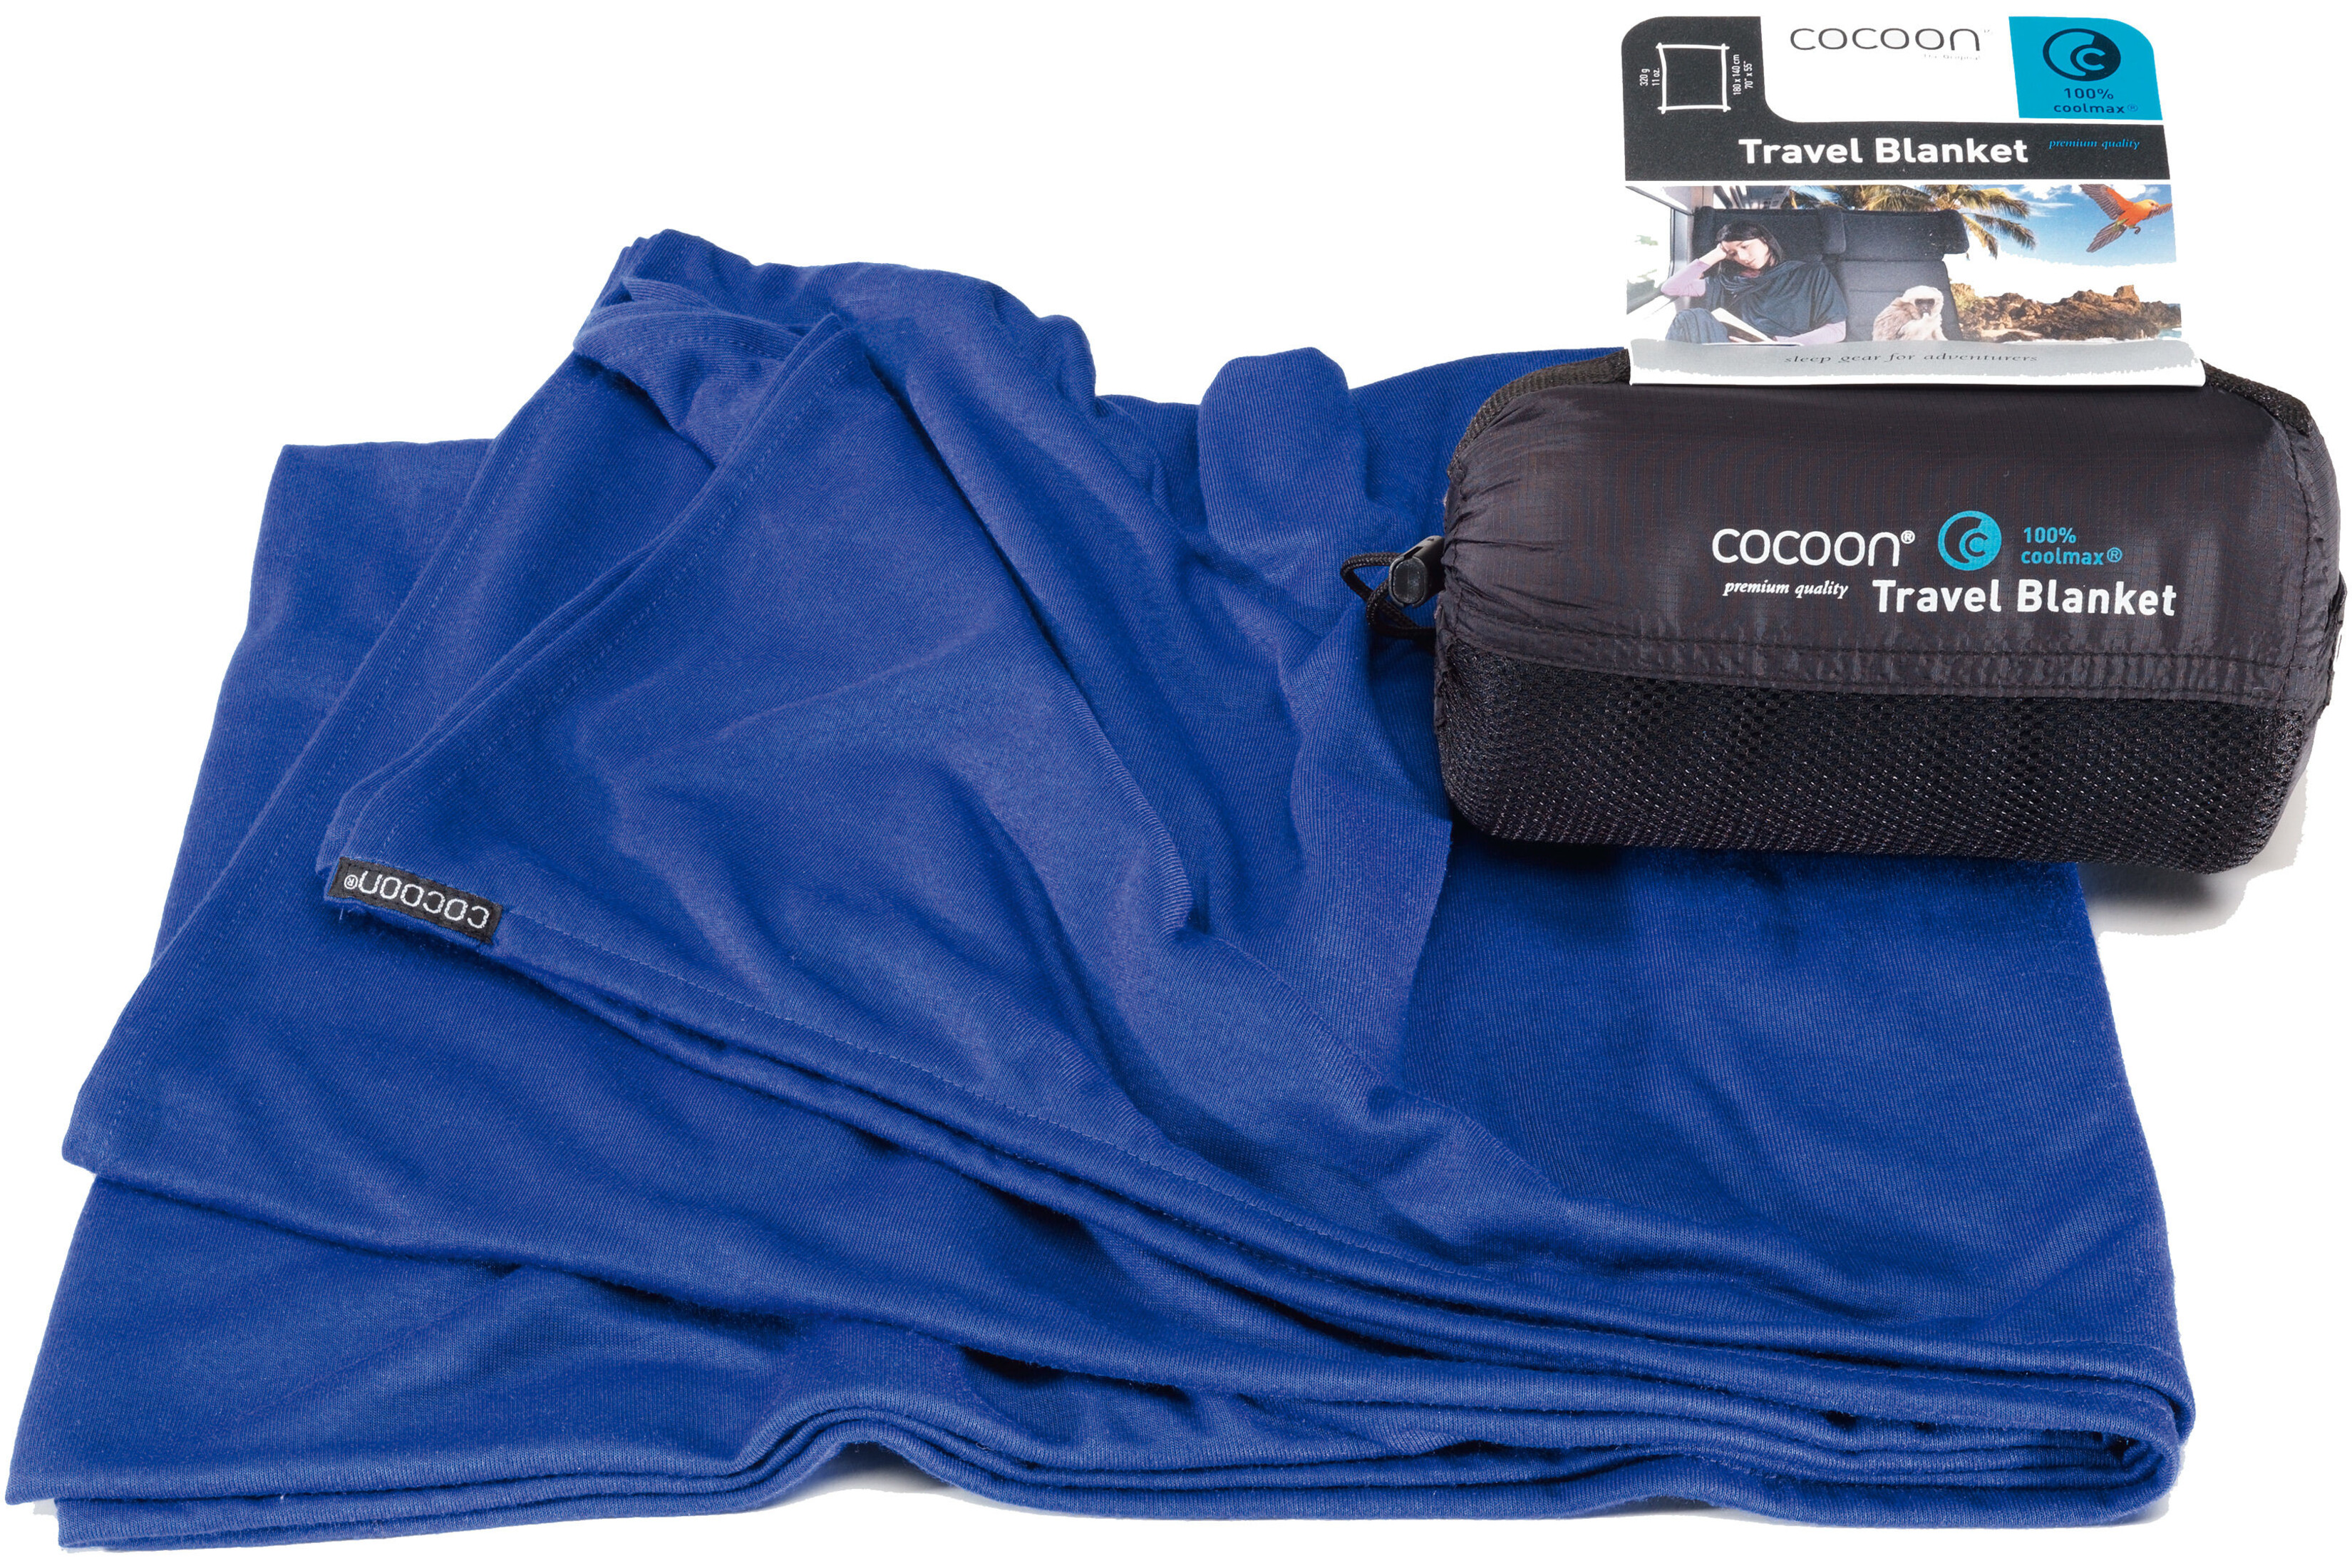 cocoon coolmax travel blanket australia